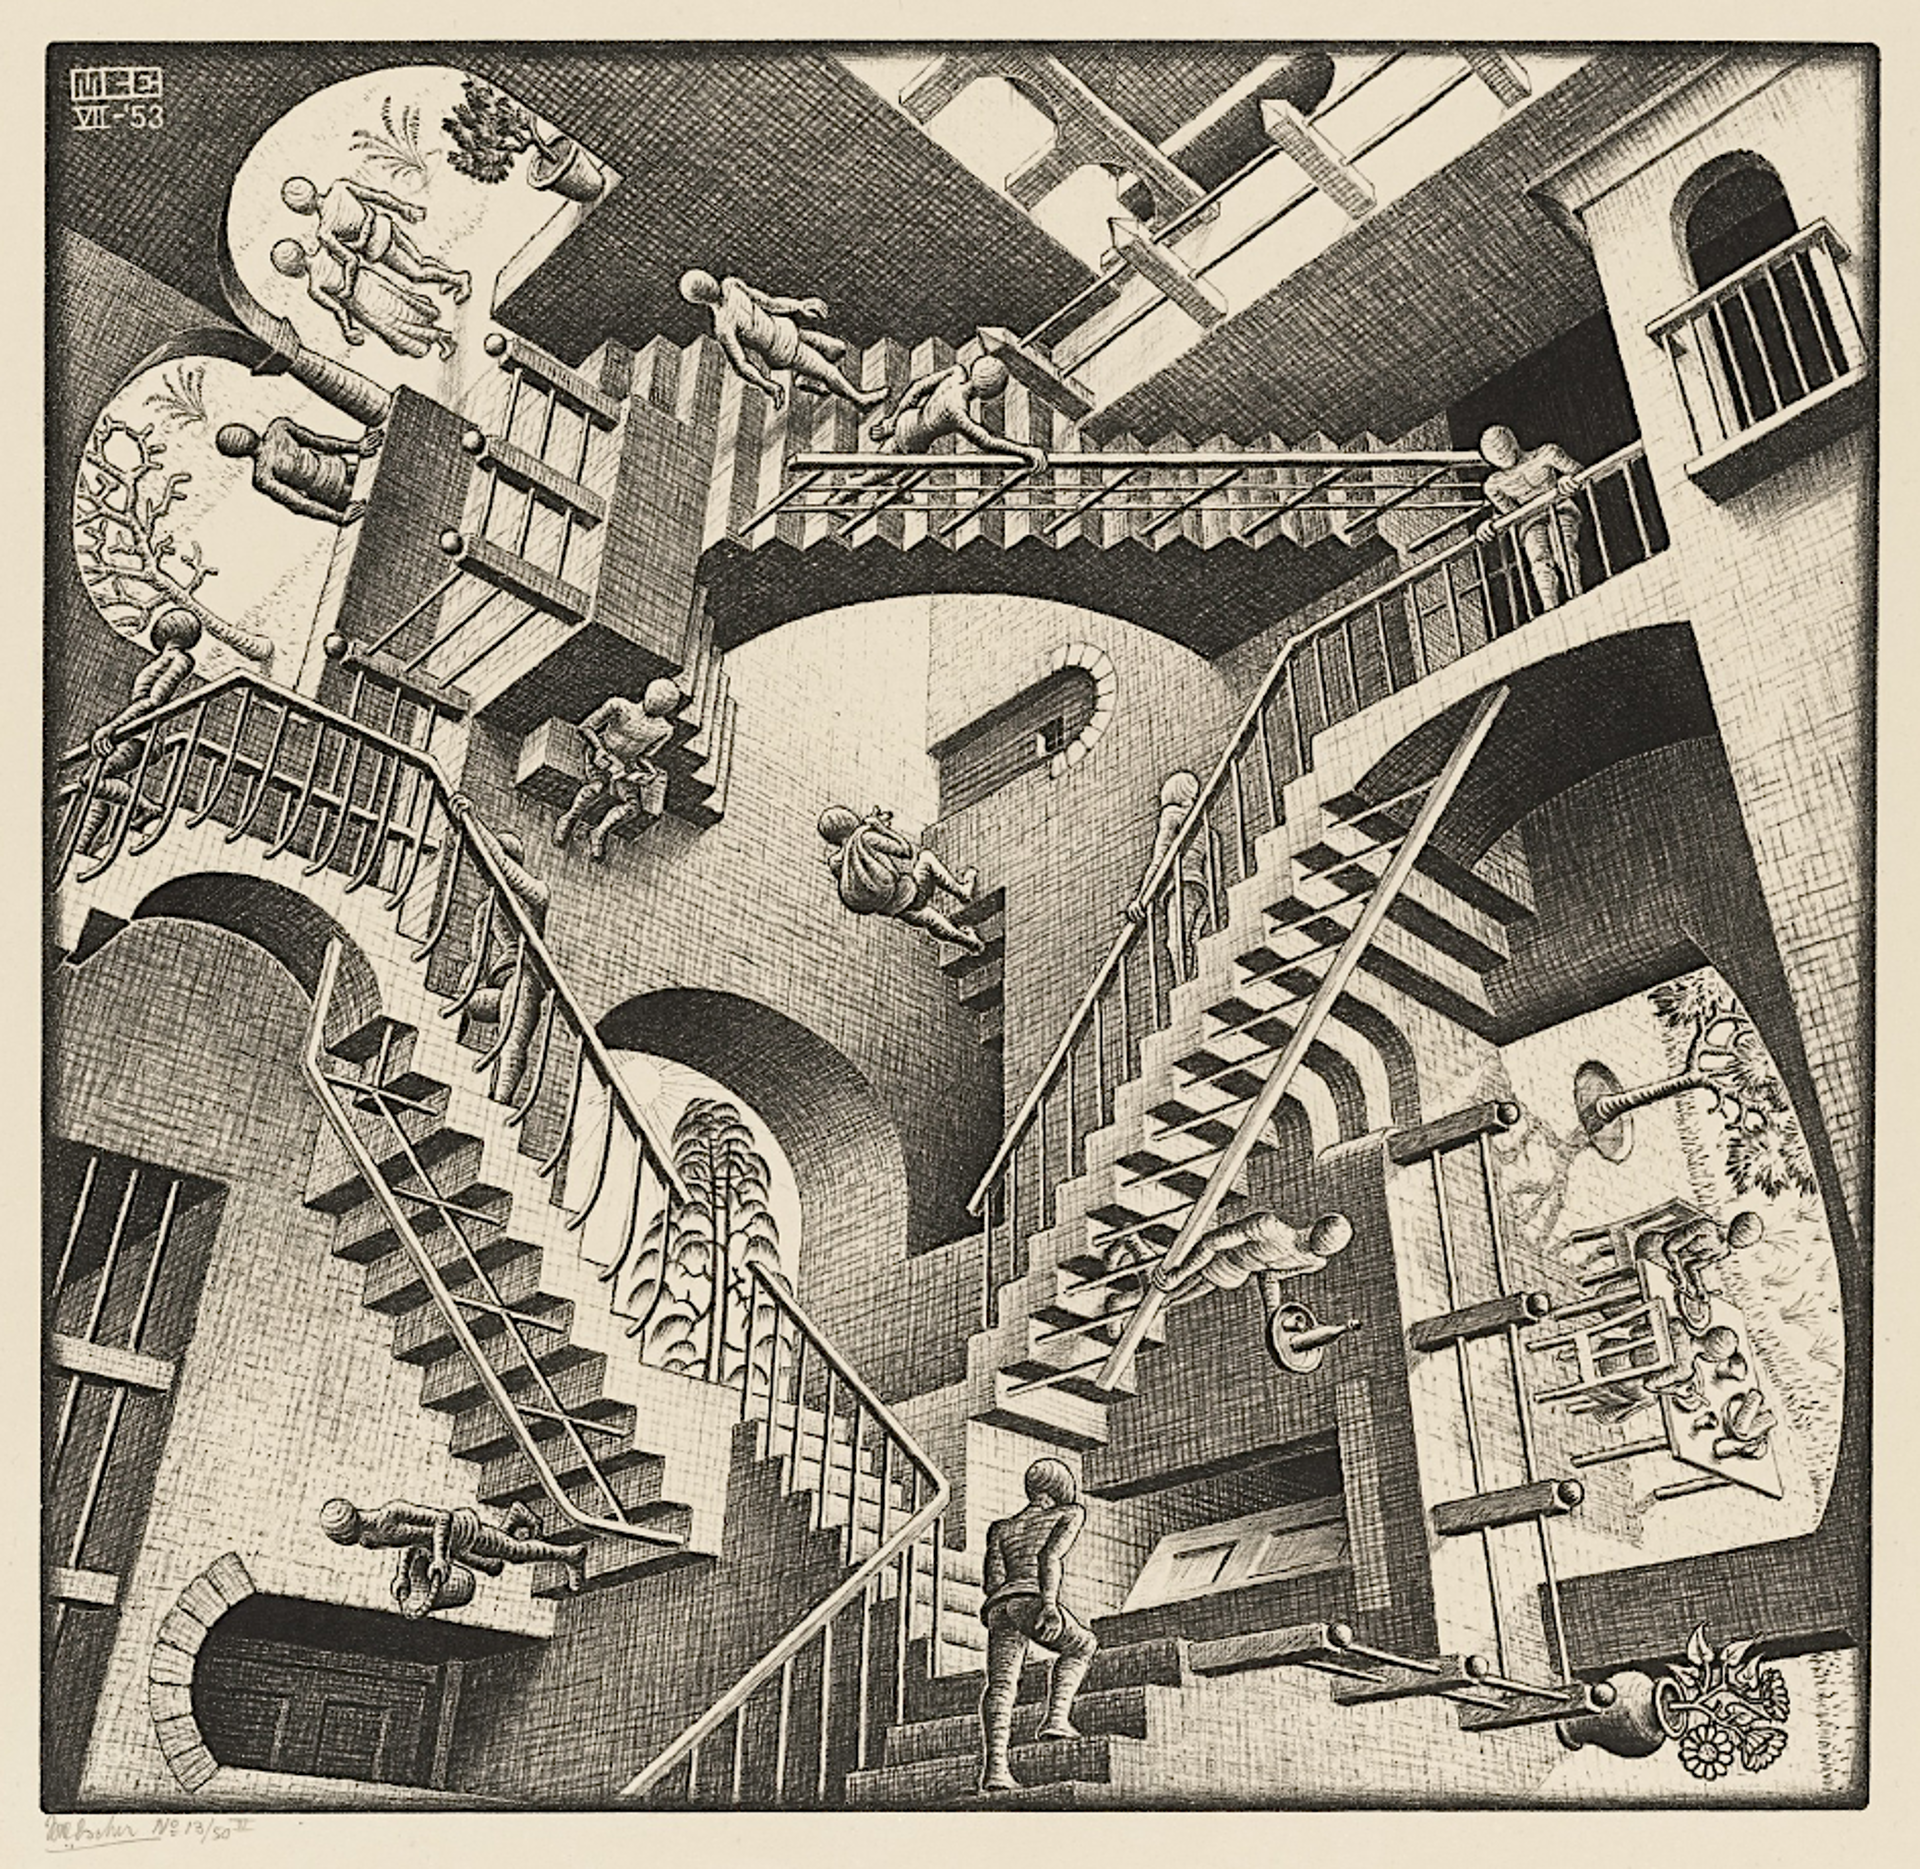 Relativity by M.C. Escher